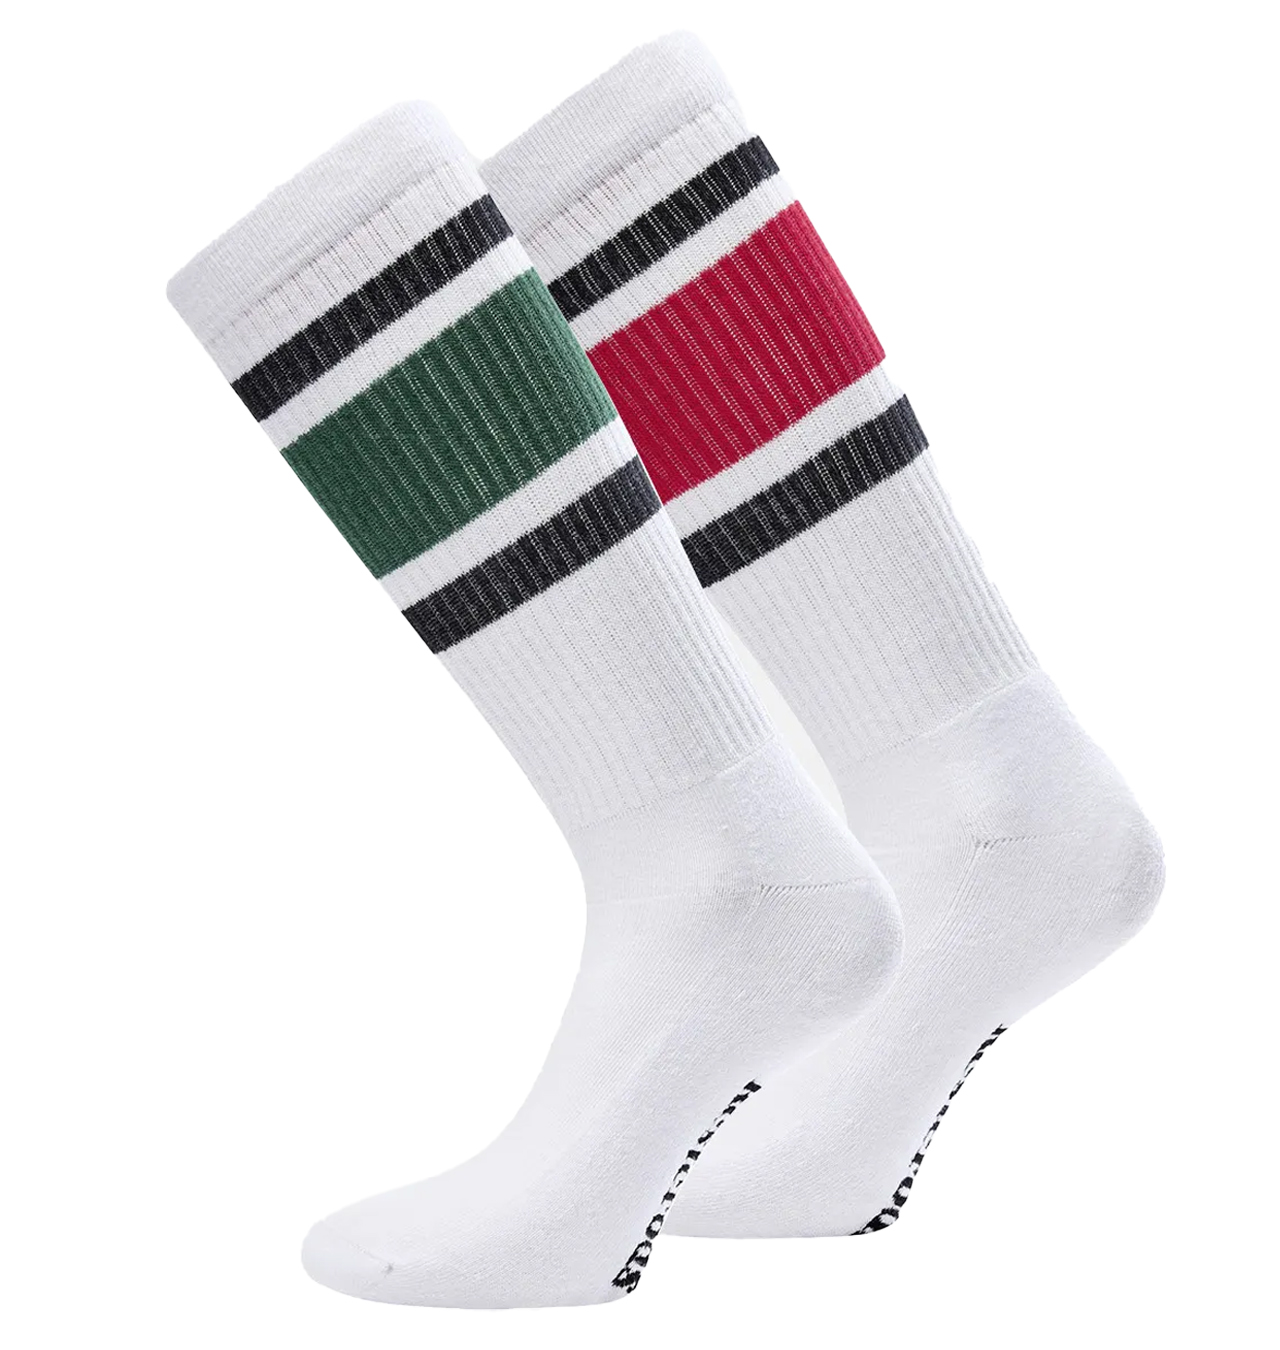 Resterods---Tennis-Socks-2-pack---Navy-Red-Green